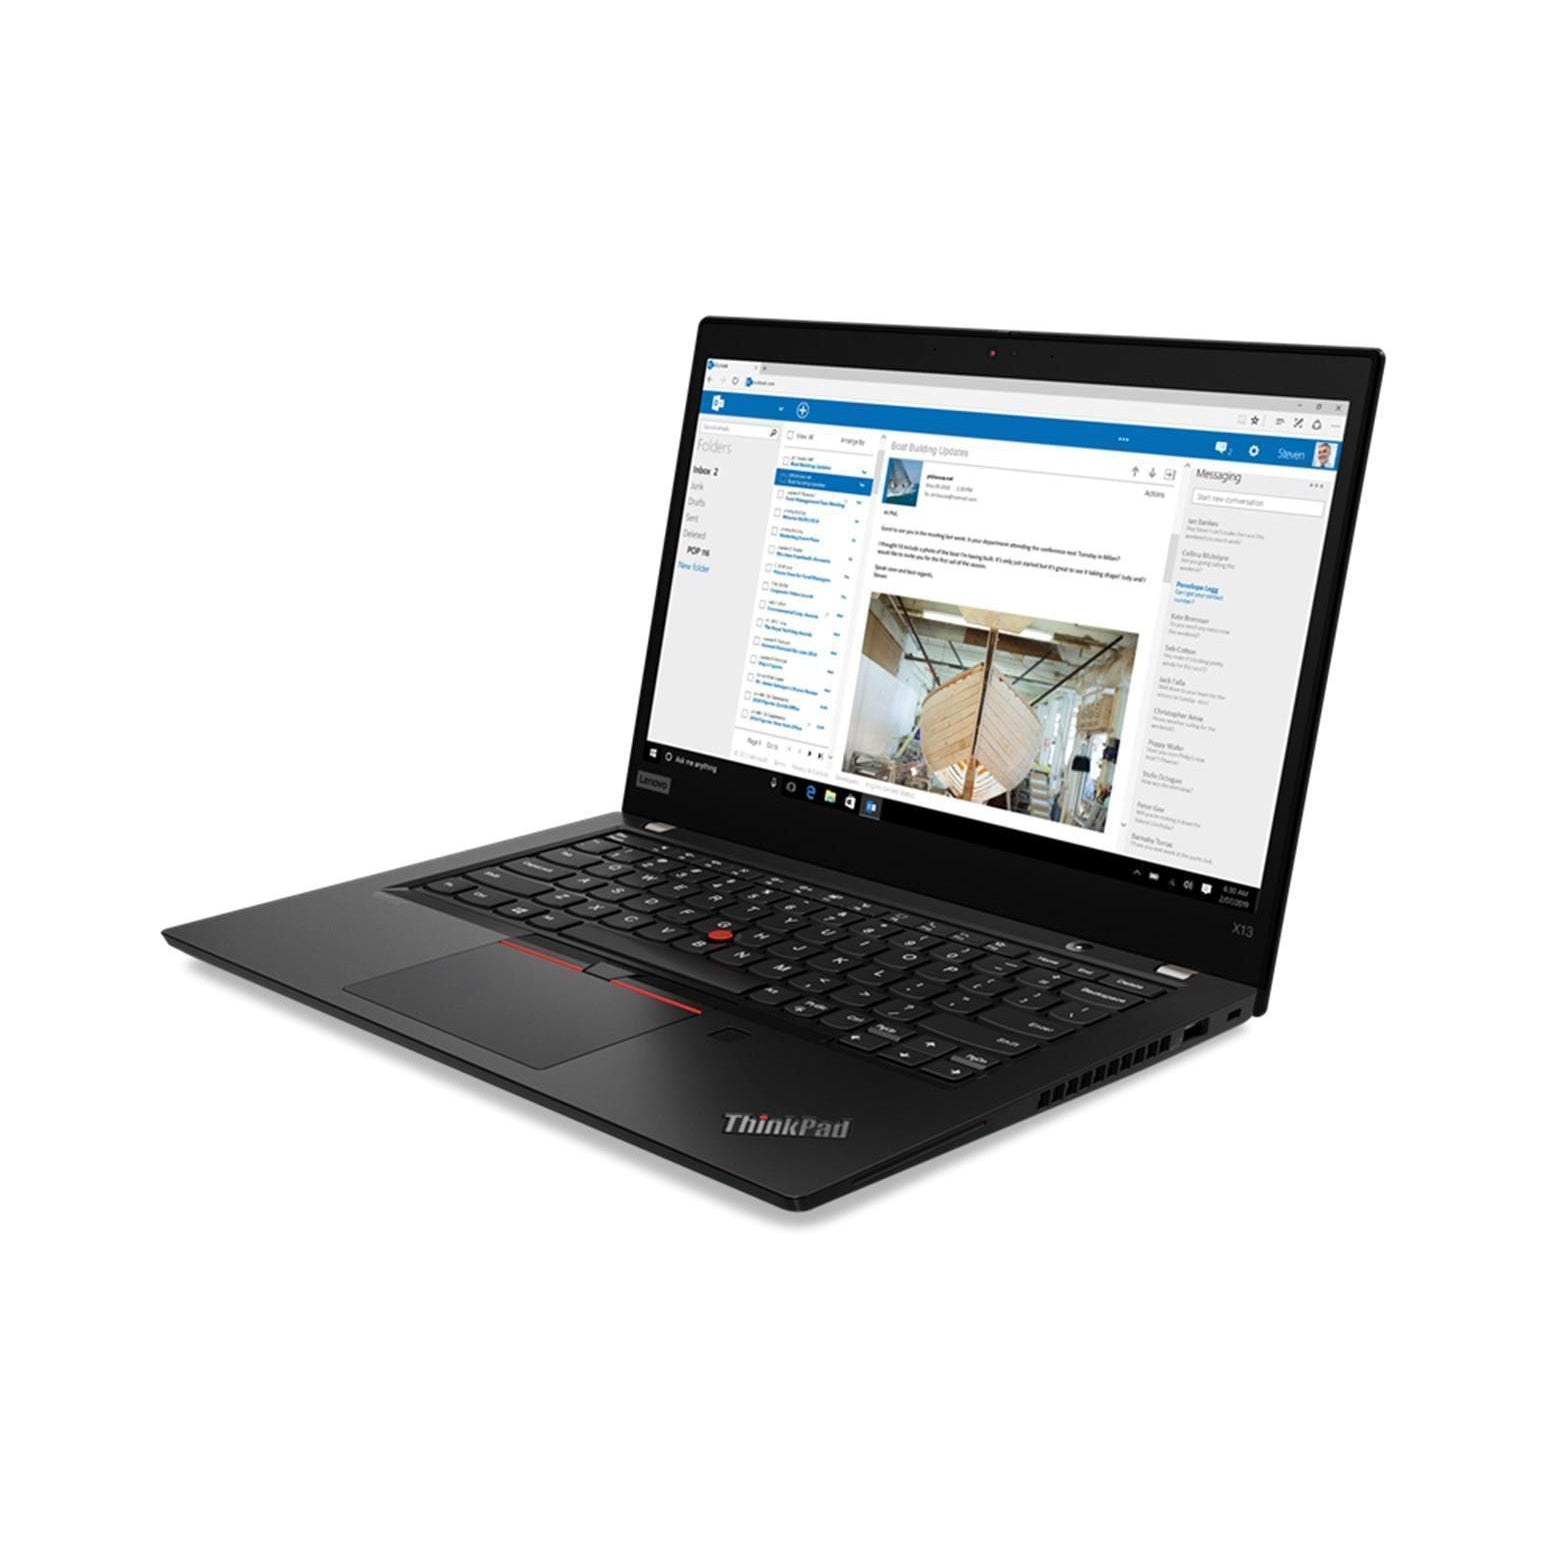 Lenovo ThinkPad 13 2nd Gen Intel Core i5 7th Generation 8GB RAM 128GB SSD - Black - Good Condition